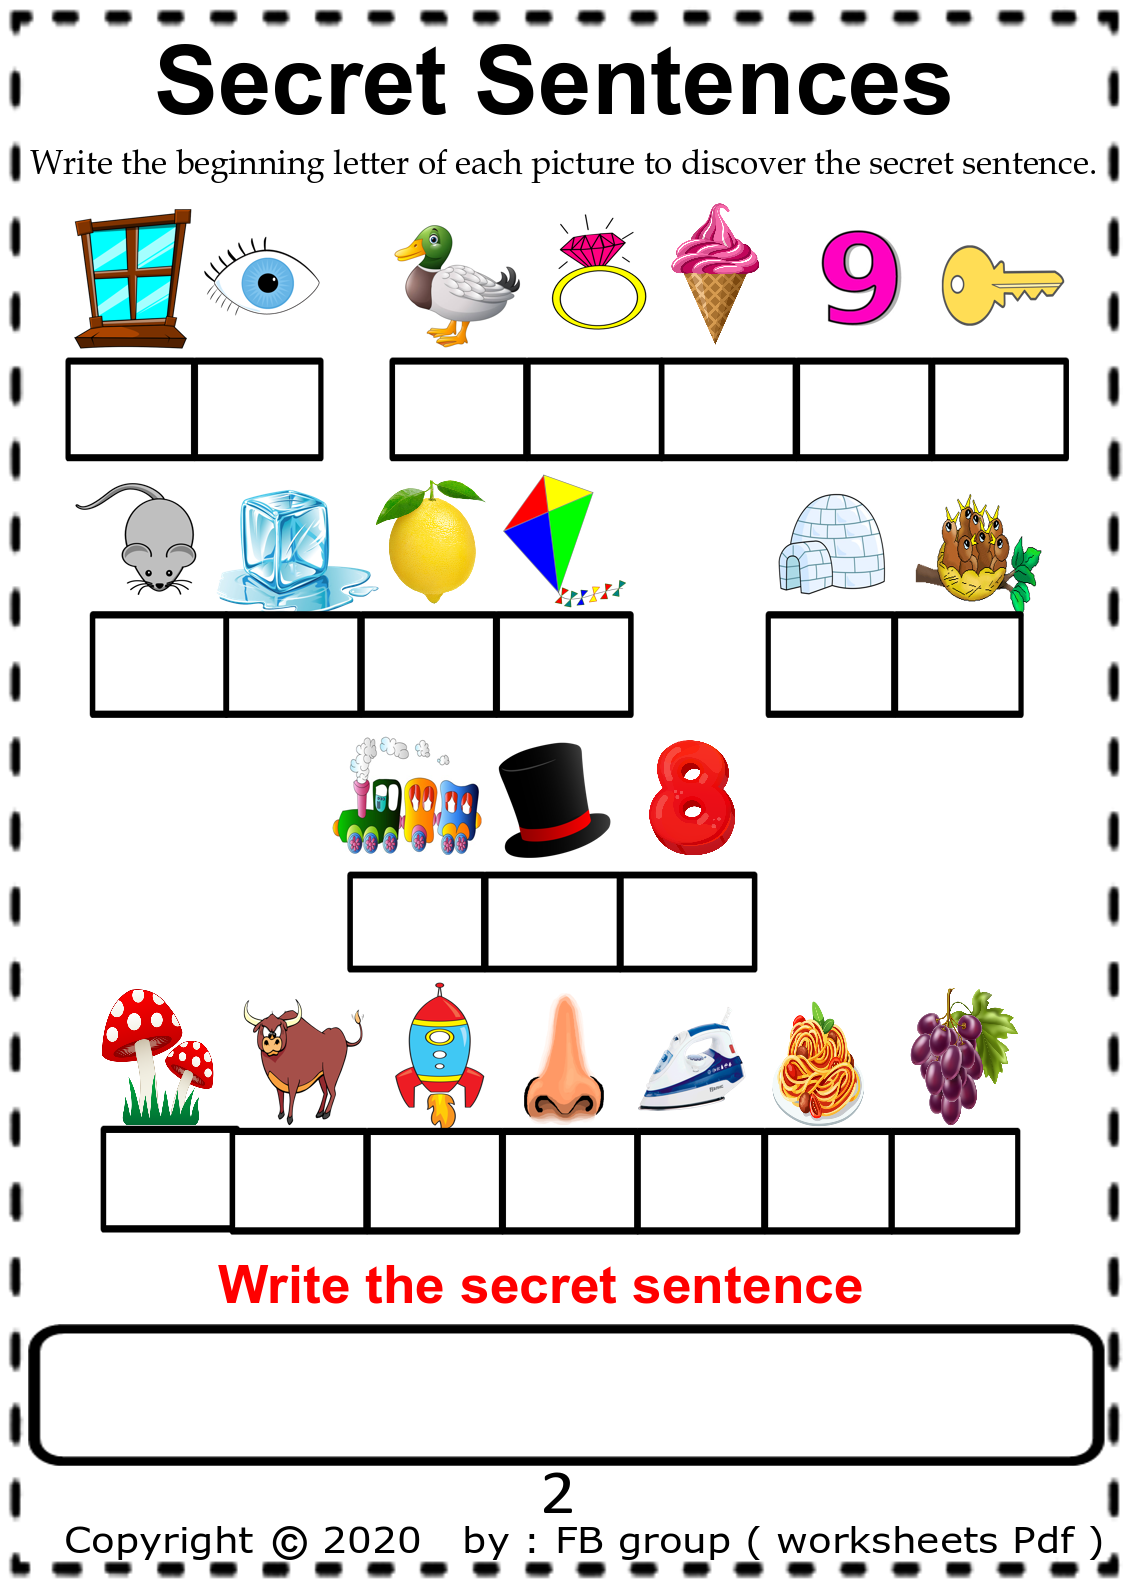 Secret sentence. Secret sentences Worksheets. Secret message Worksheet. Write the Secret sentence. The secret word is